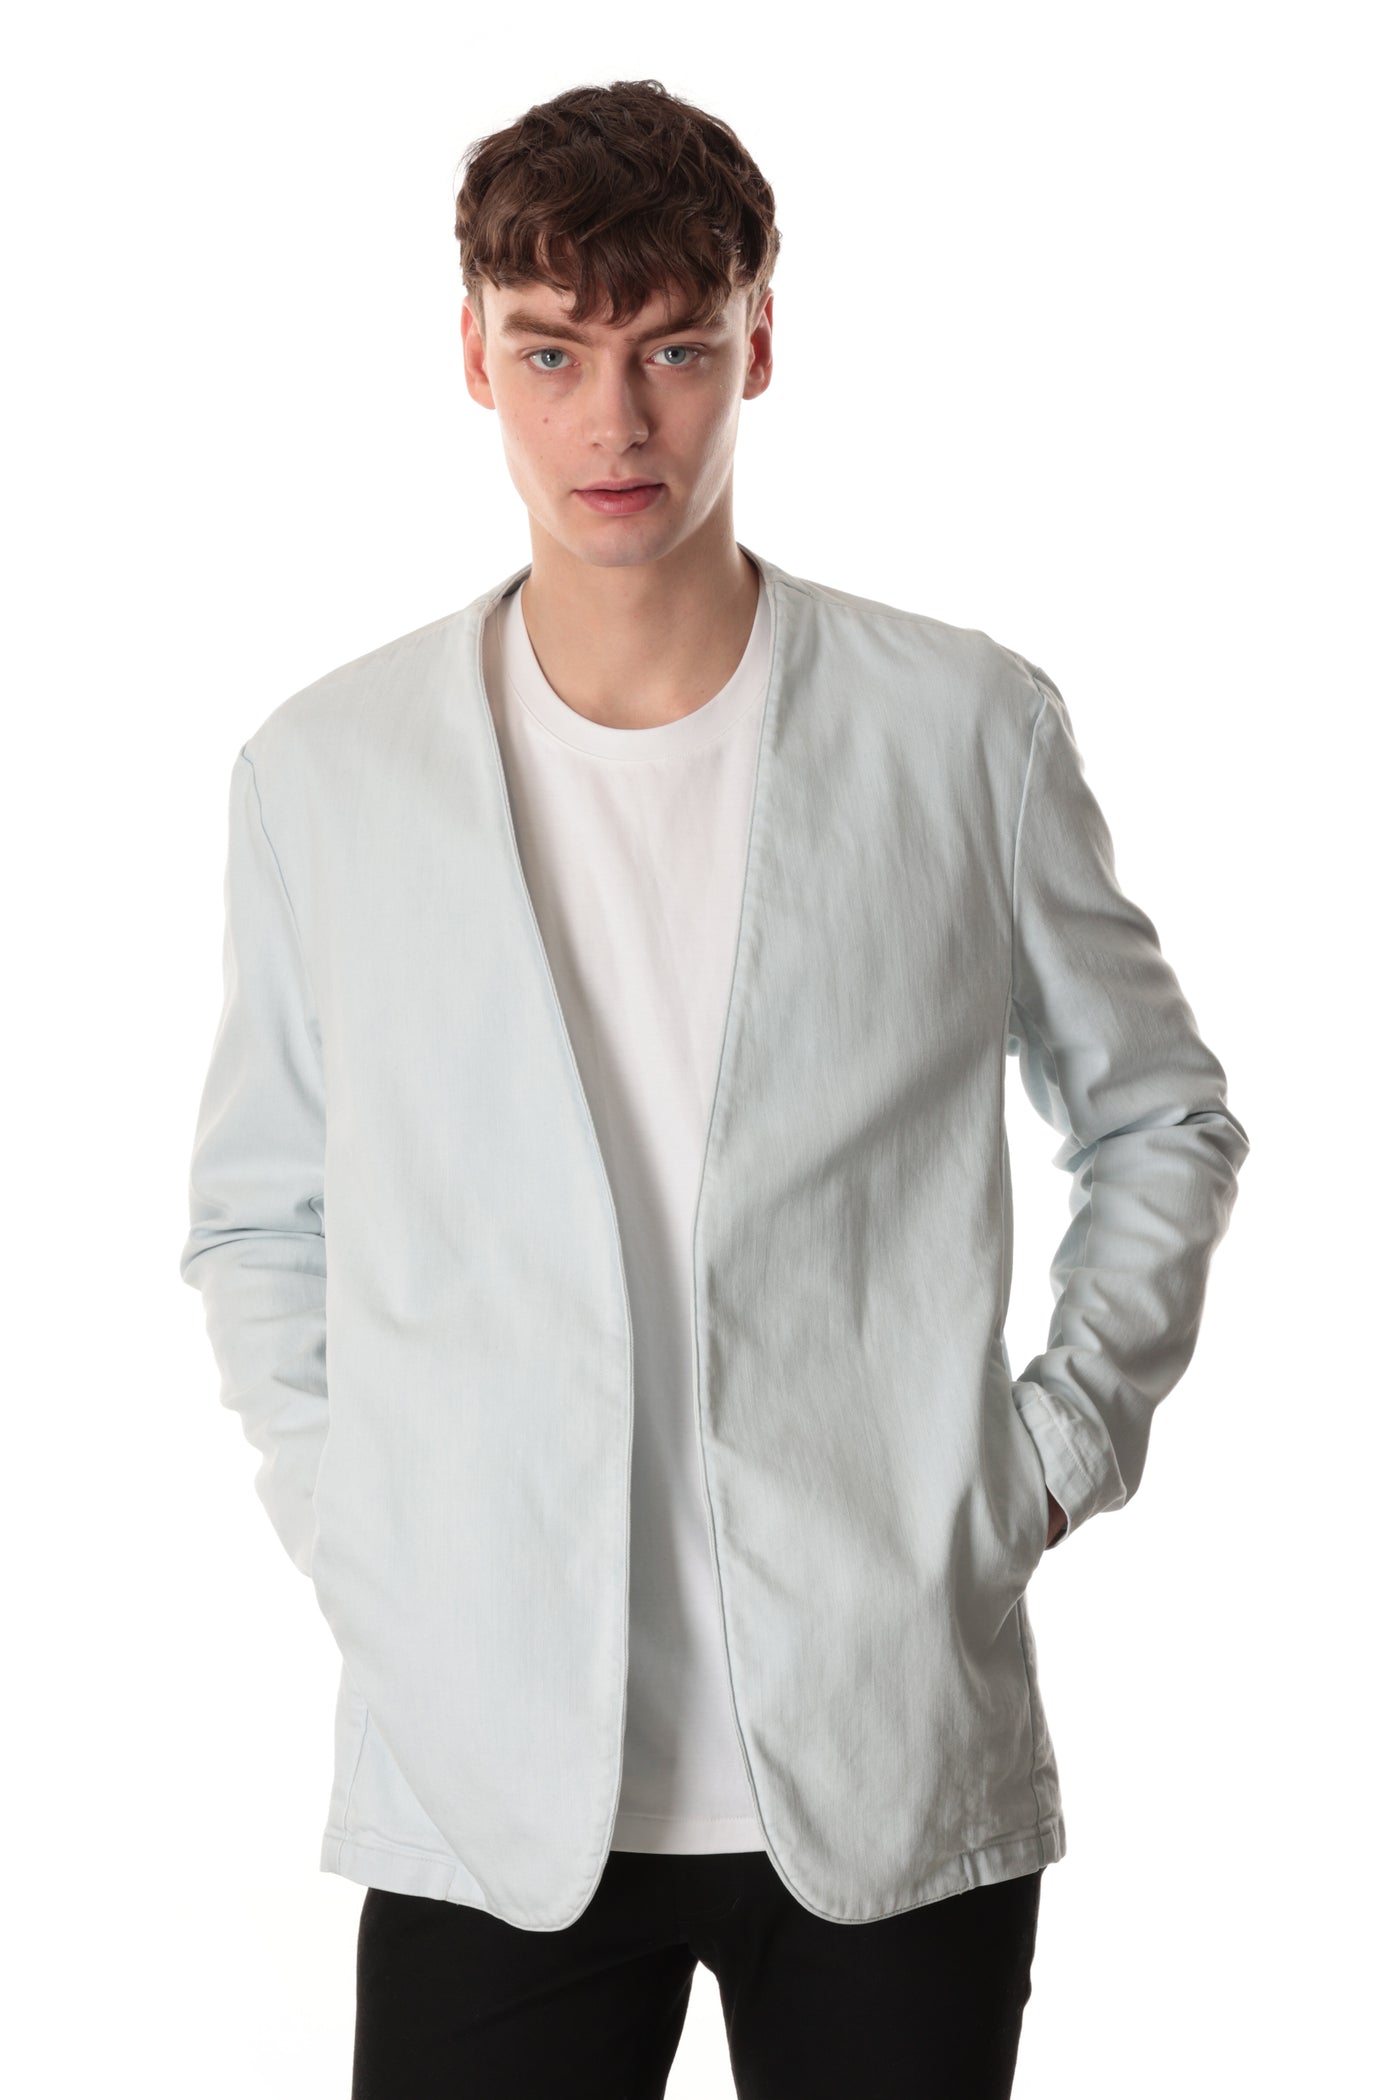 AG32-018 Supima cotton stretch denim collarless jacket (light blue)